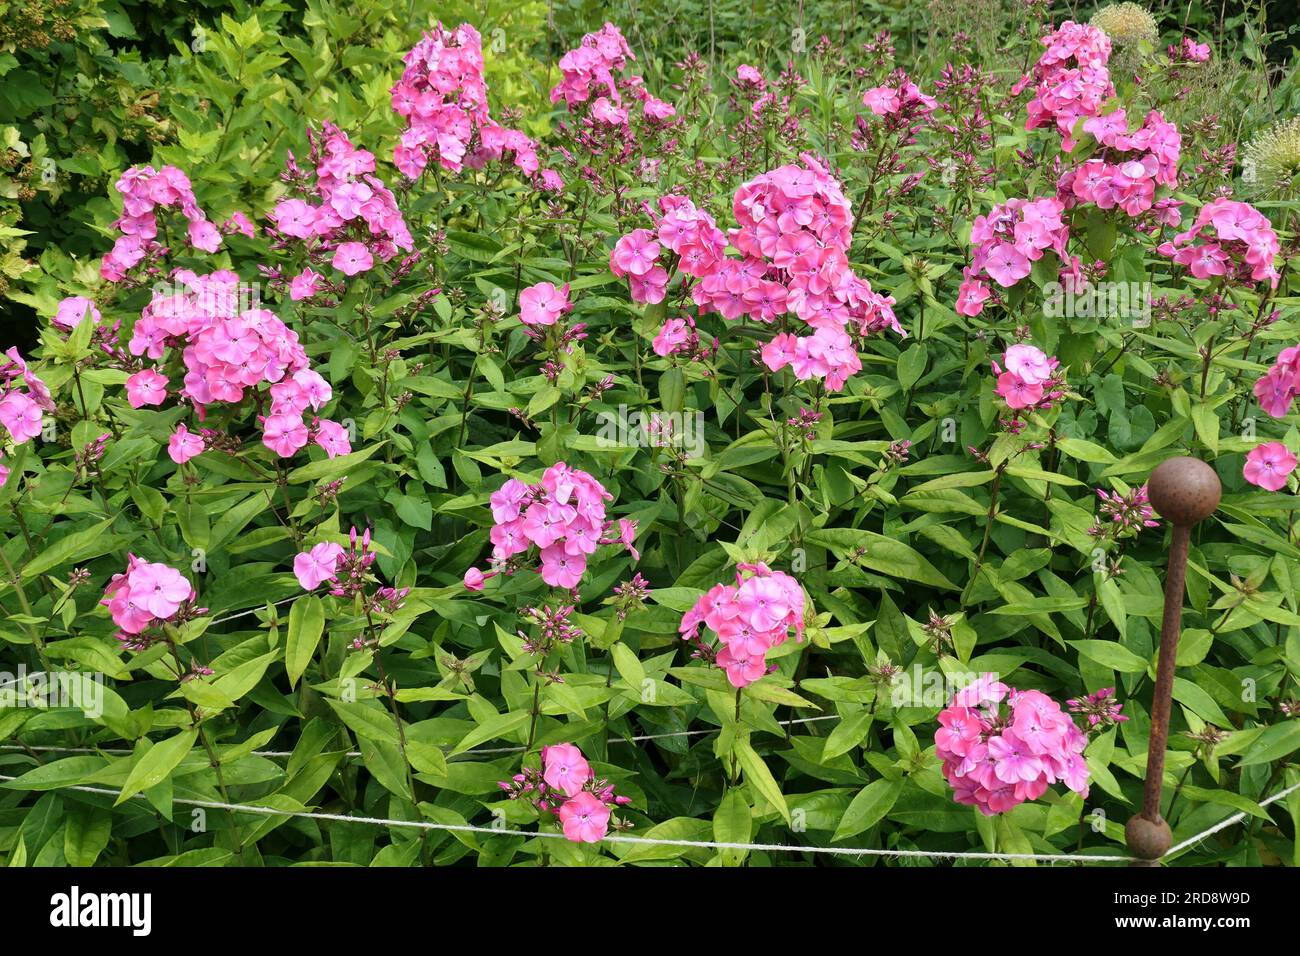 Closeup of the pink flowering herbaceous perennial garden plant phlox paniculata otley choice. Stock Photo